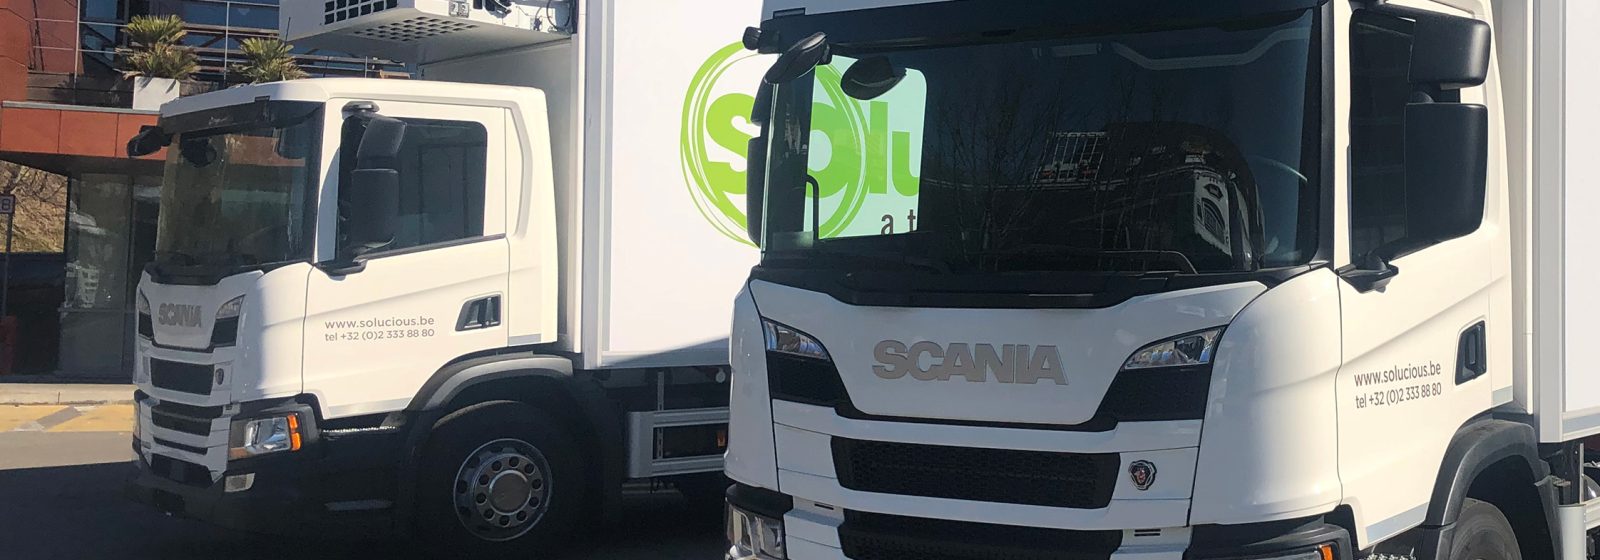 20220408 Scania e-truck Colruyt